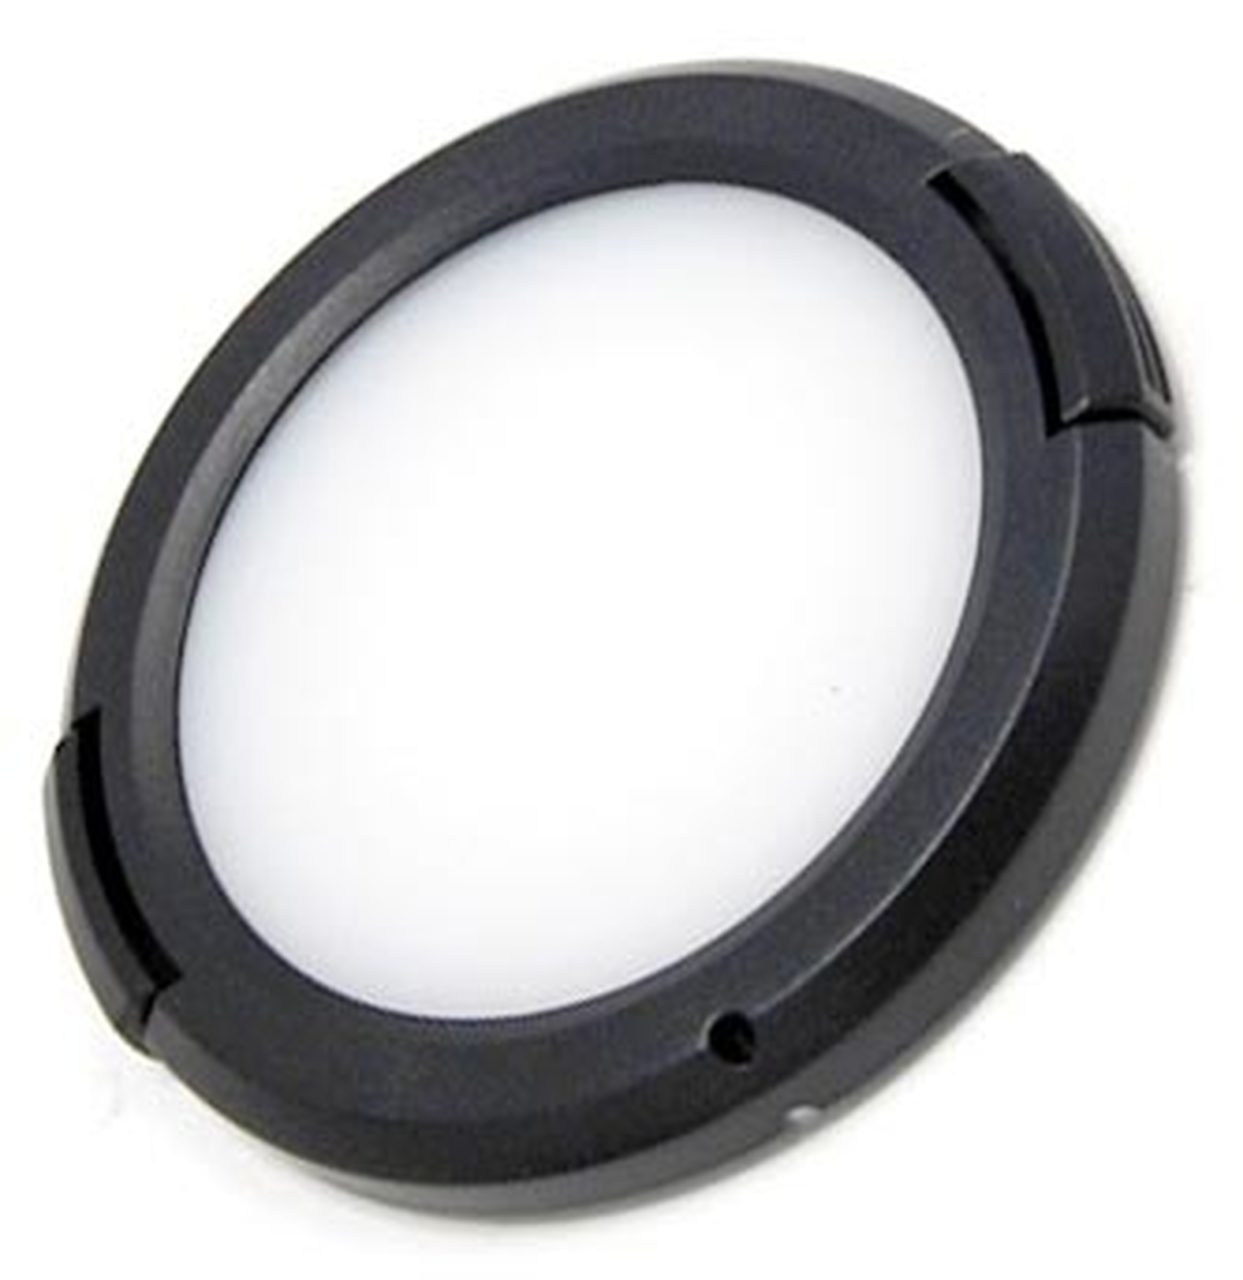 Promaster 6297 62mm White Balance Lens  Cap